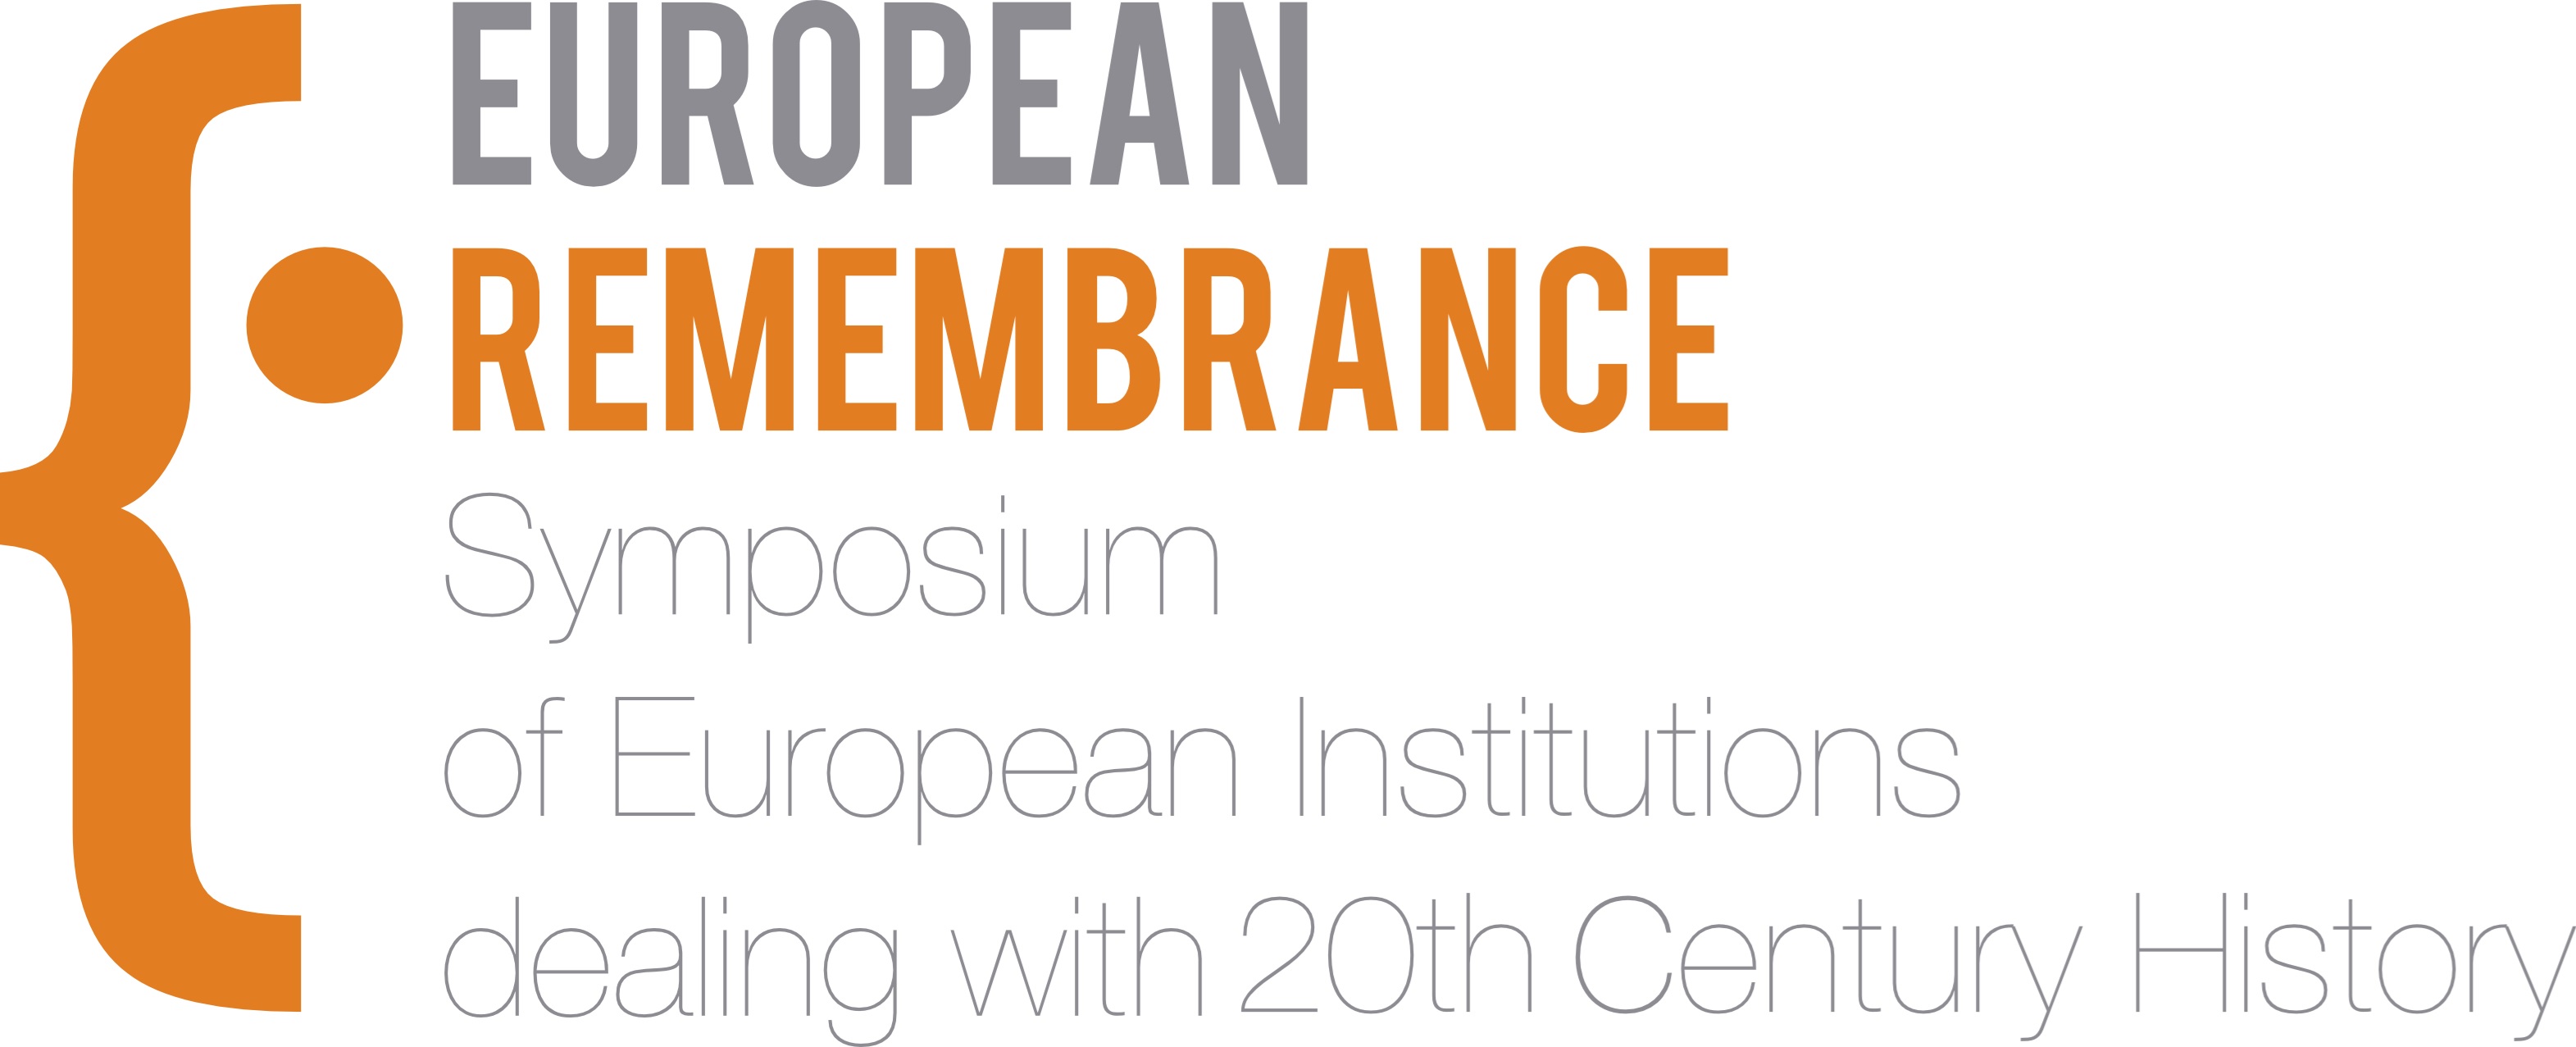 European Remembrance Symposium in Berlin